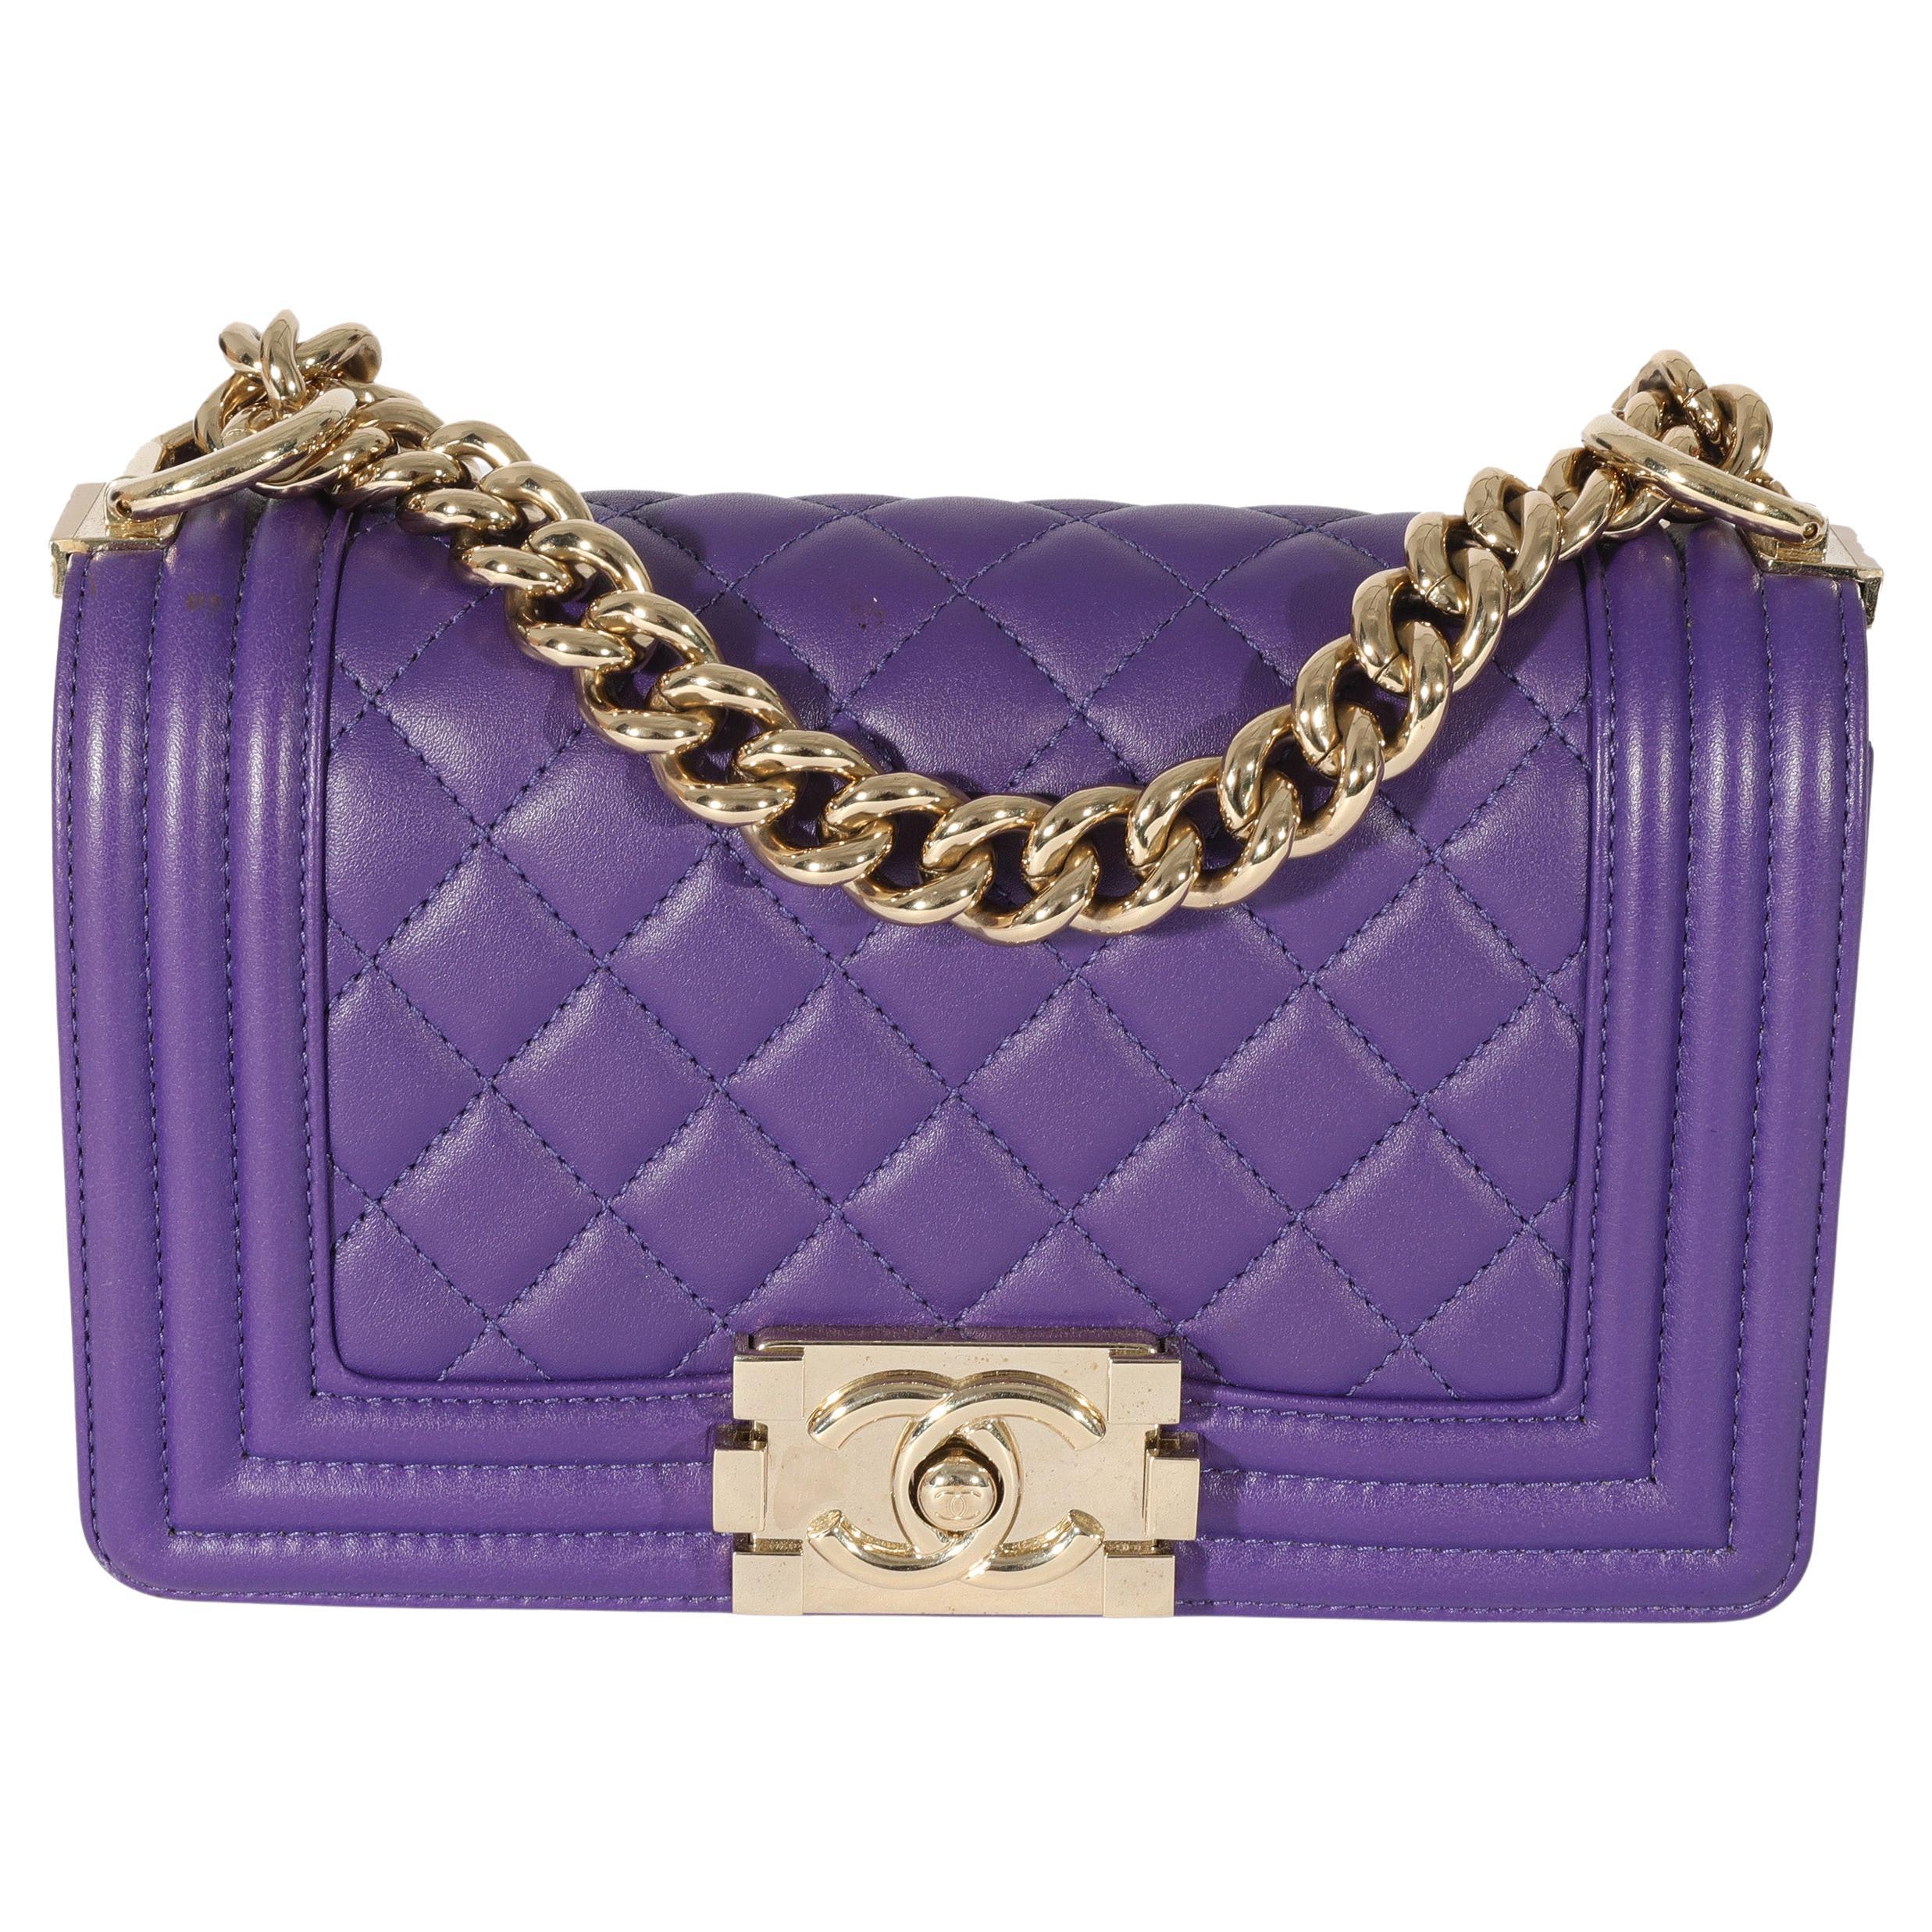 CHANEL, Bags, Purple Medium Boy Chanel Handbag